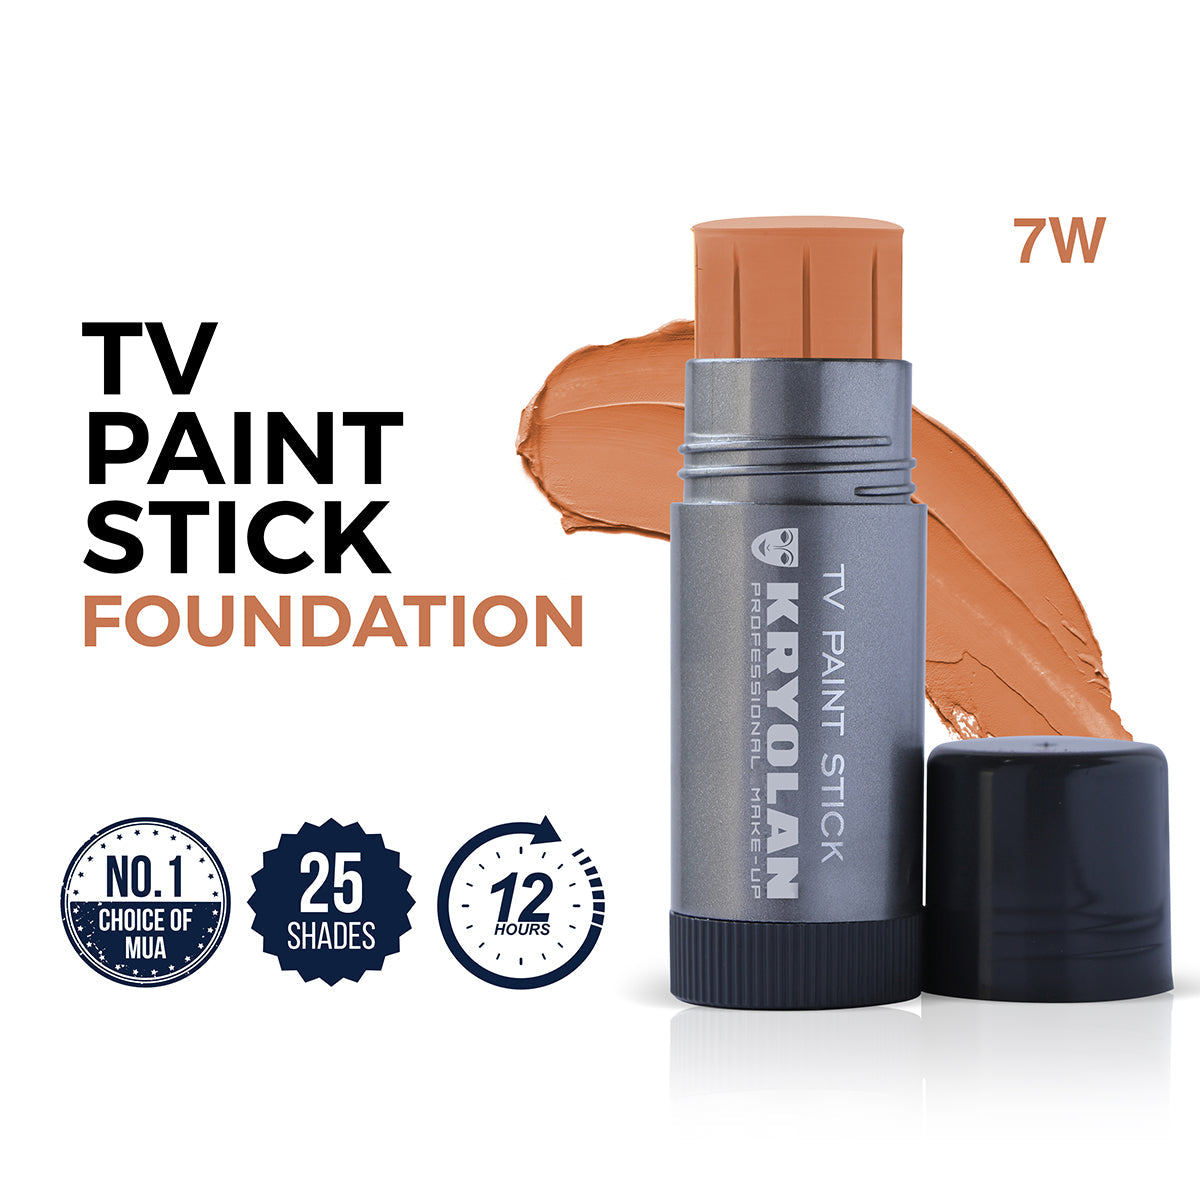 KRYOLAN Tv Paint Stick 2W Foundation - Price in India, Buy KRYOLAN